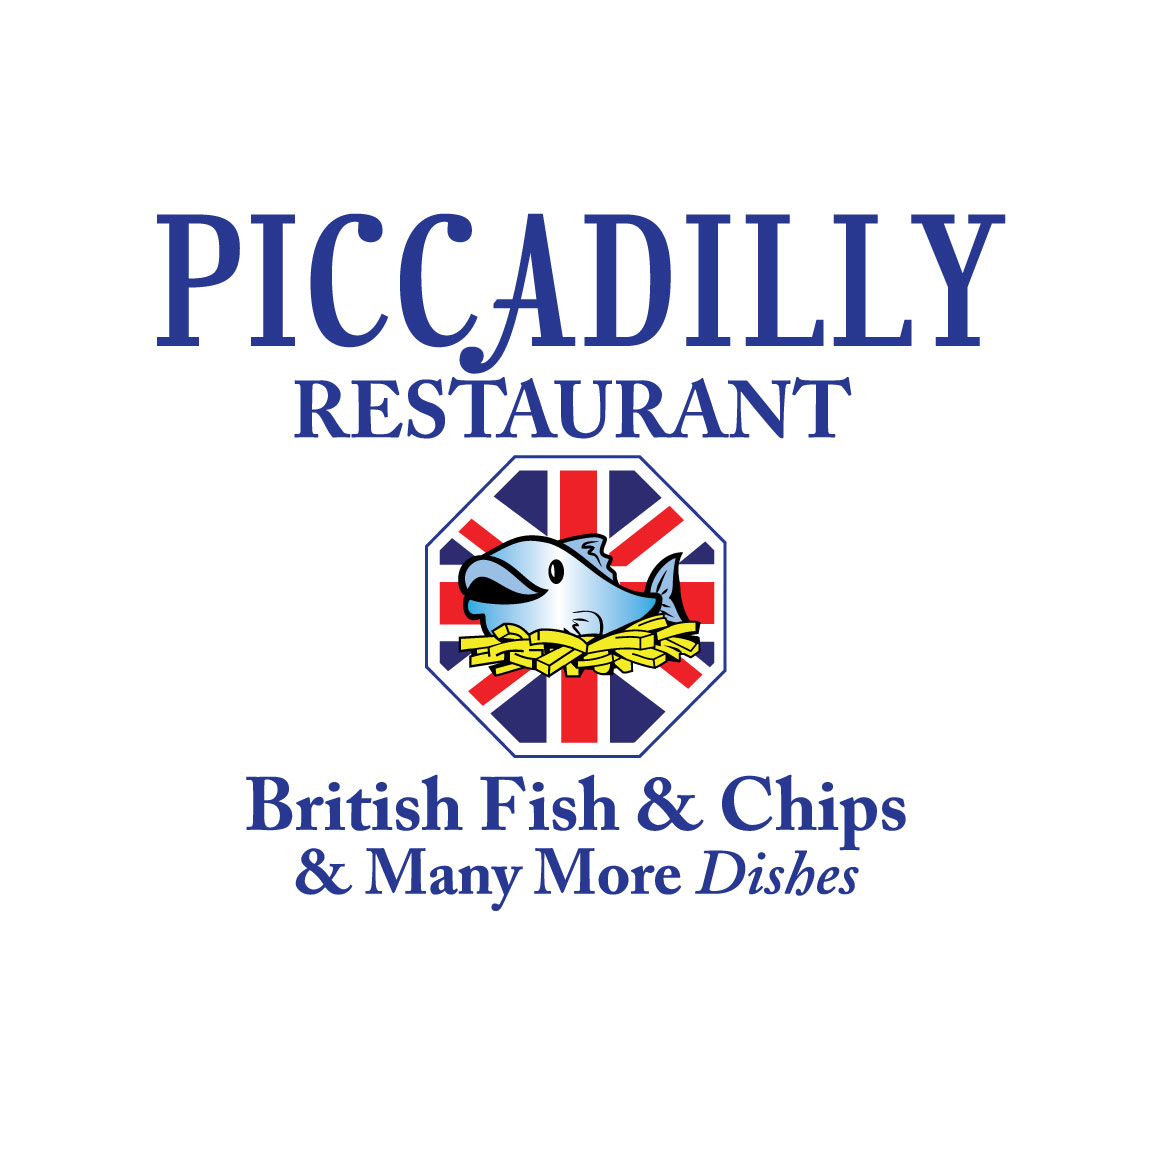 Piccadilly Restaurant